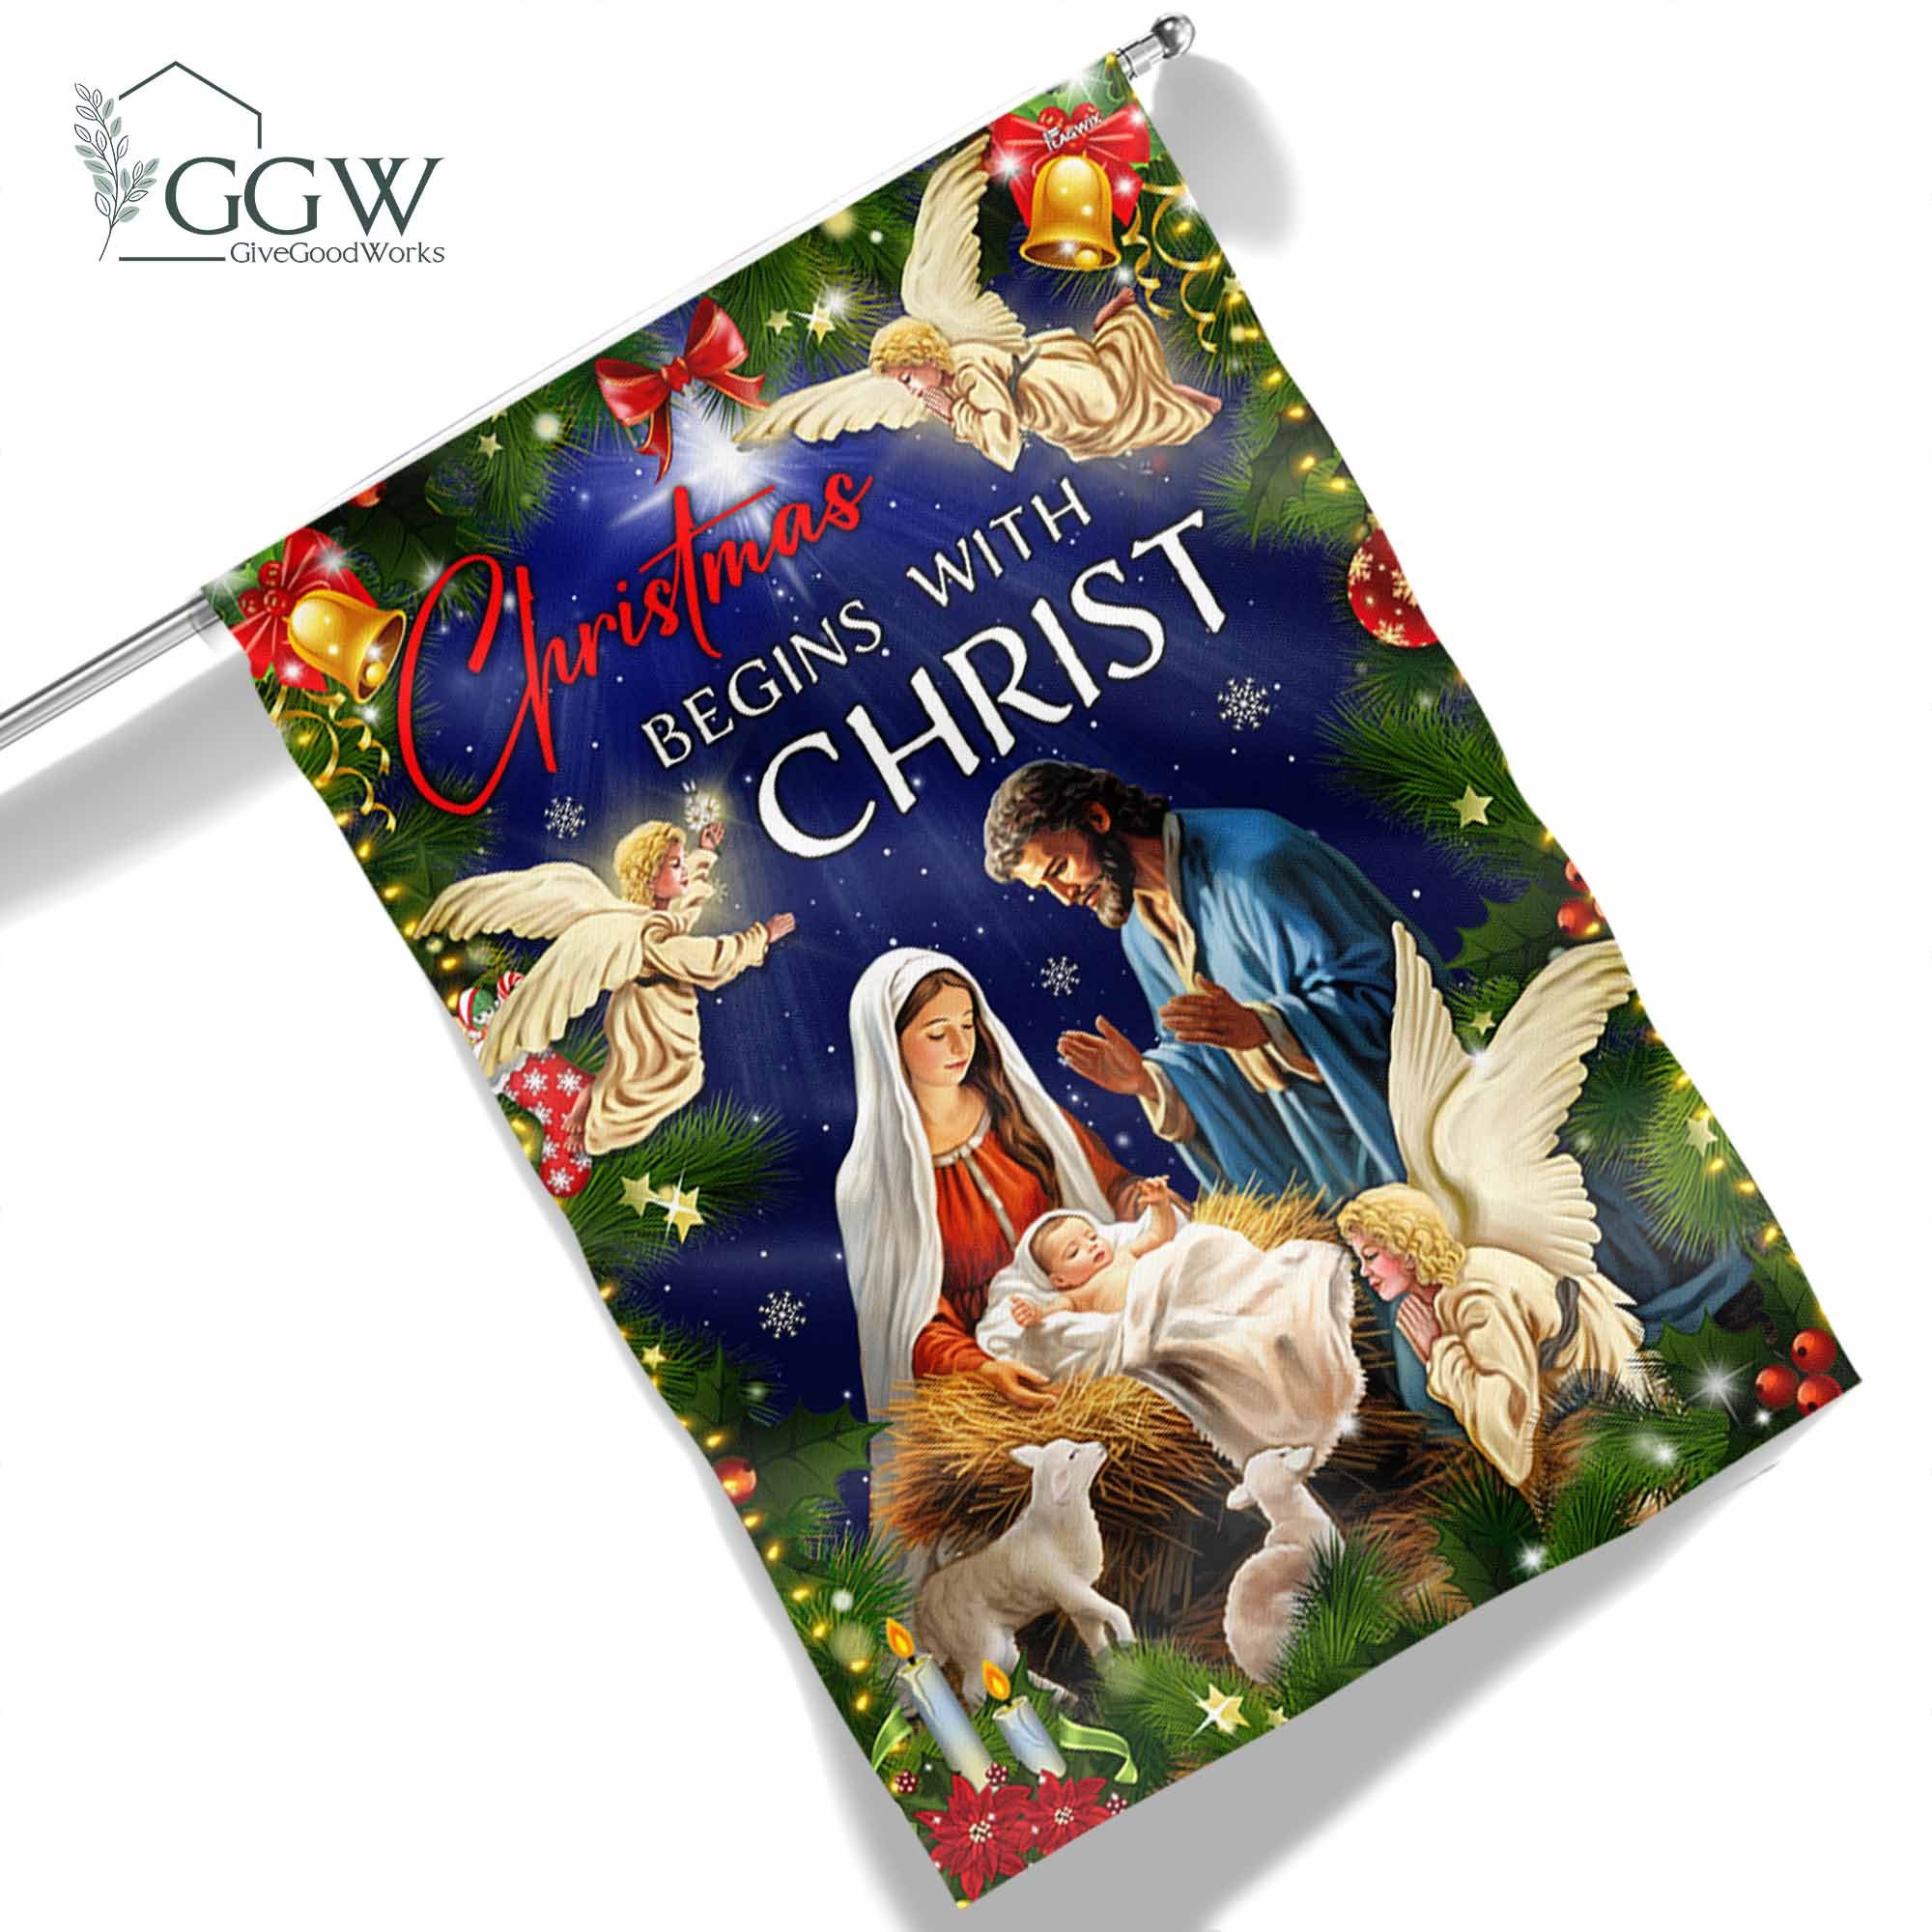 Discover Christmas Begins With Christ Flag, Christmas Decor, Nativity Decor, Manger Scene